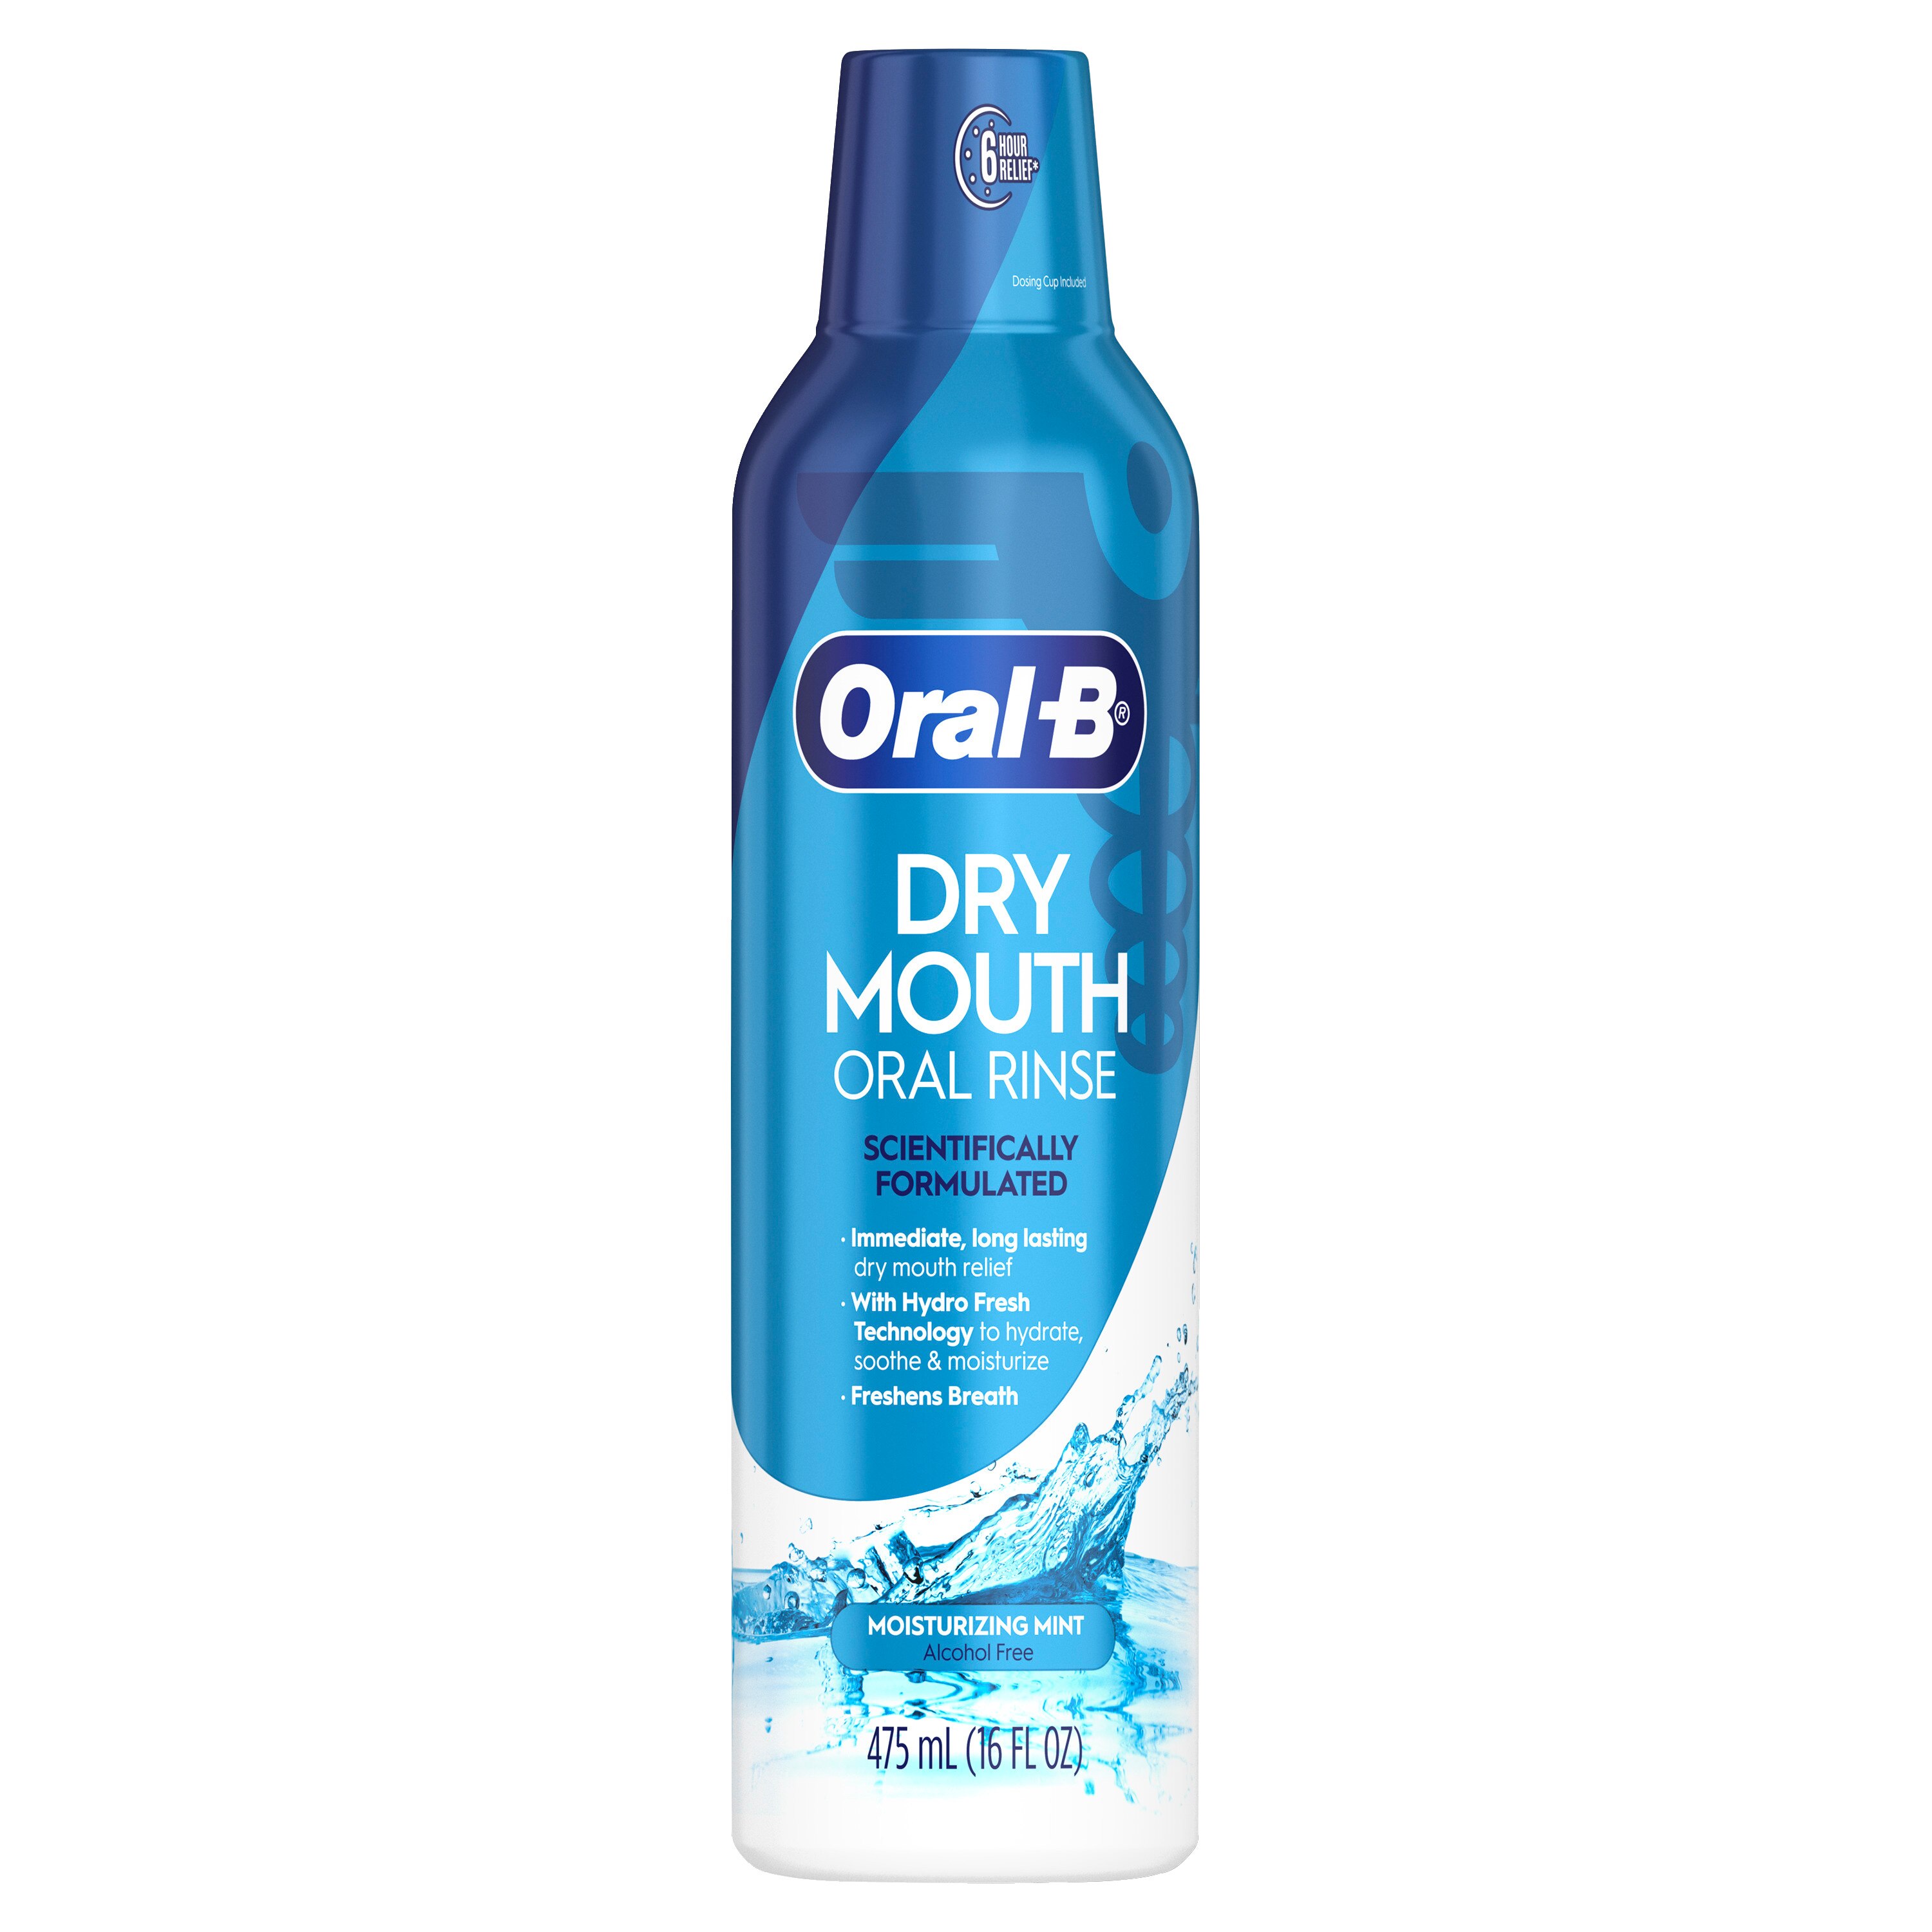 Oral-B Dry Mouth Oral Rinse Mouthwash, Moisturizing Mint, 475 mL (16 fl oz)